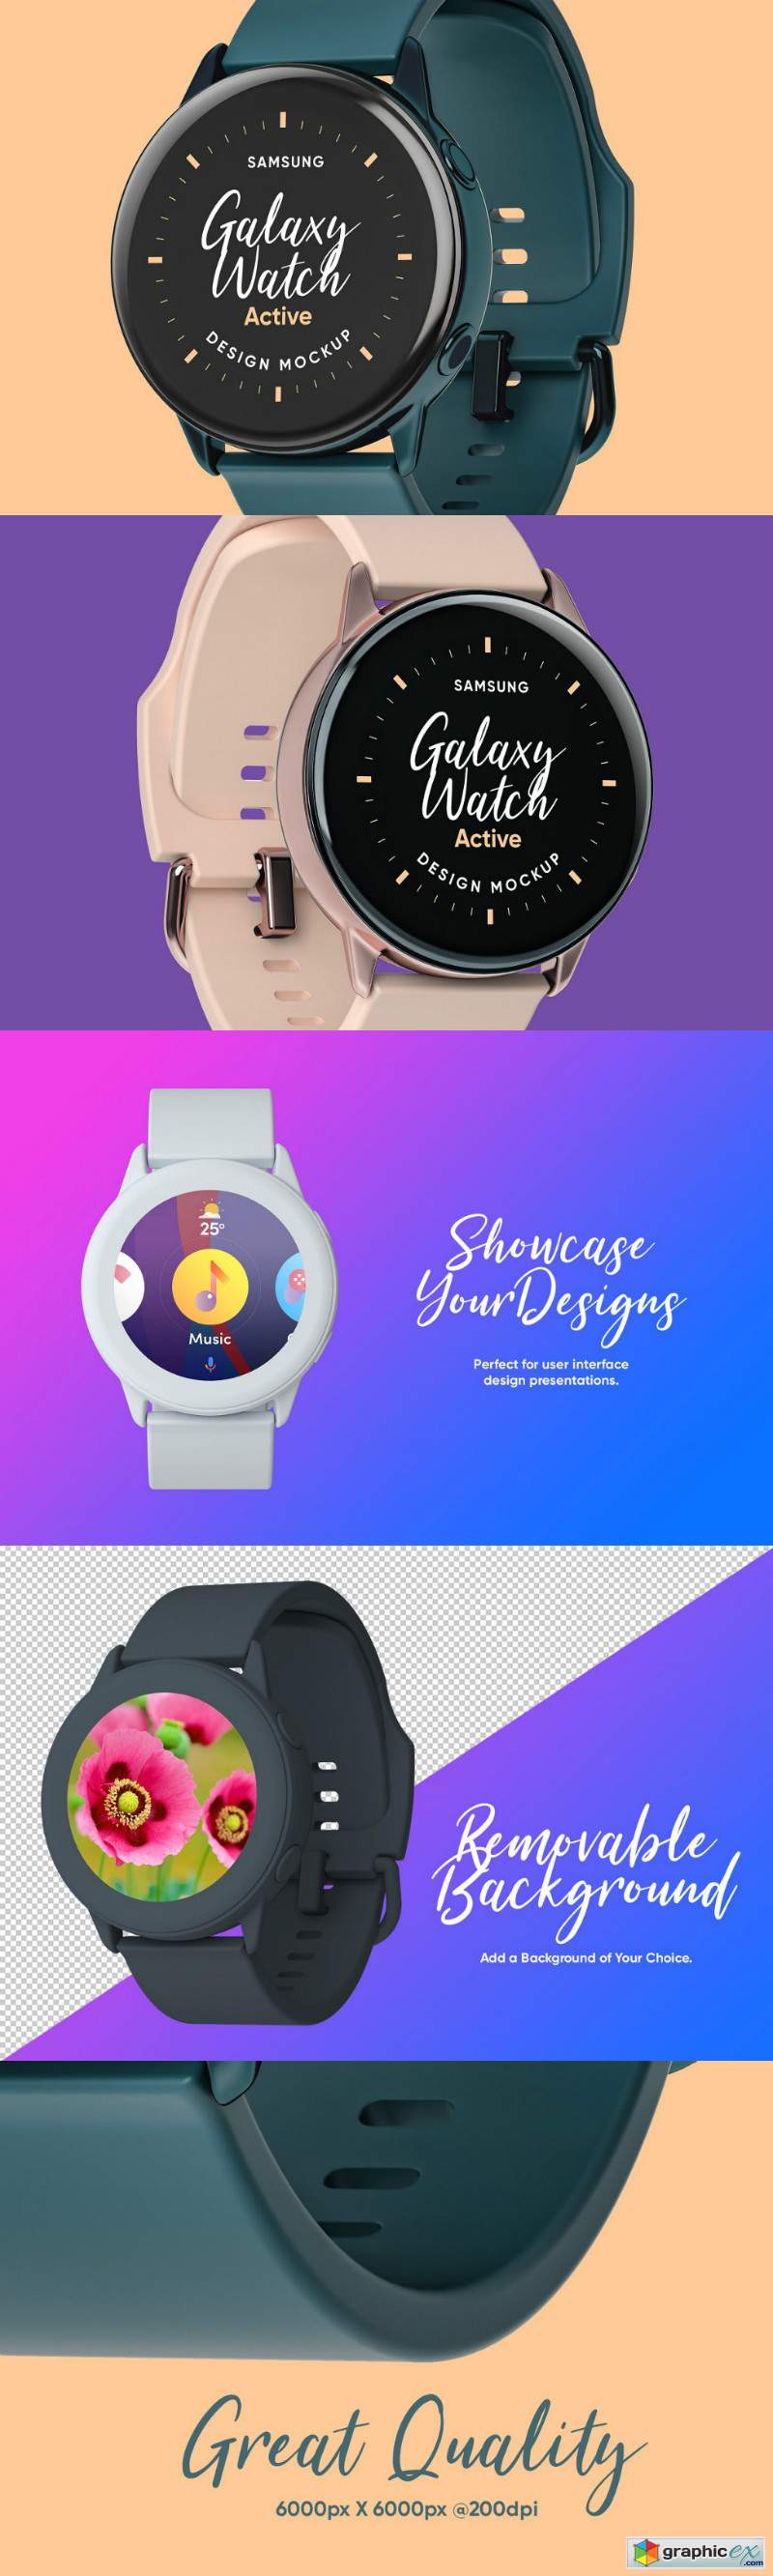 Samsung Galaxy Watch Design Mockup